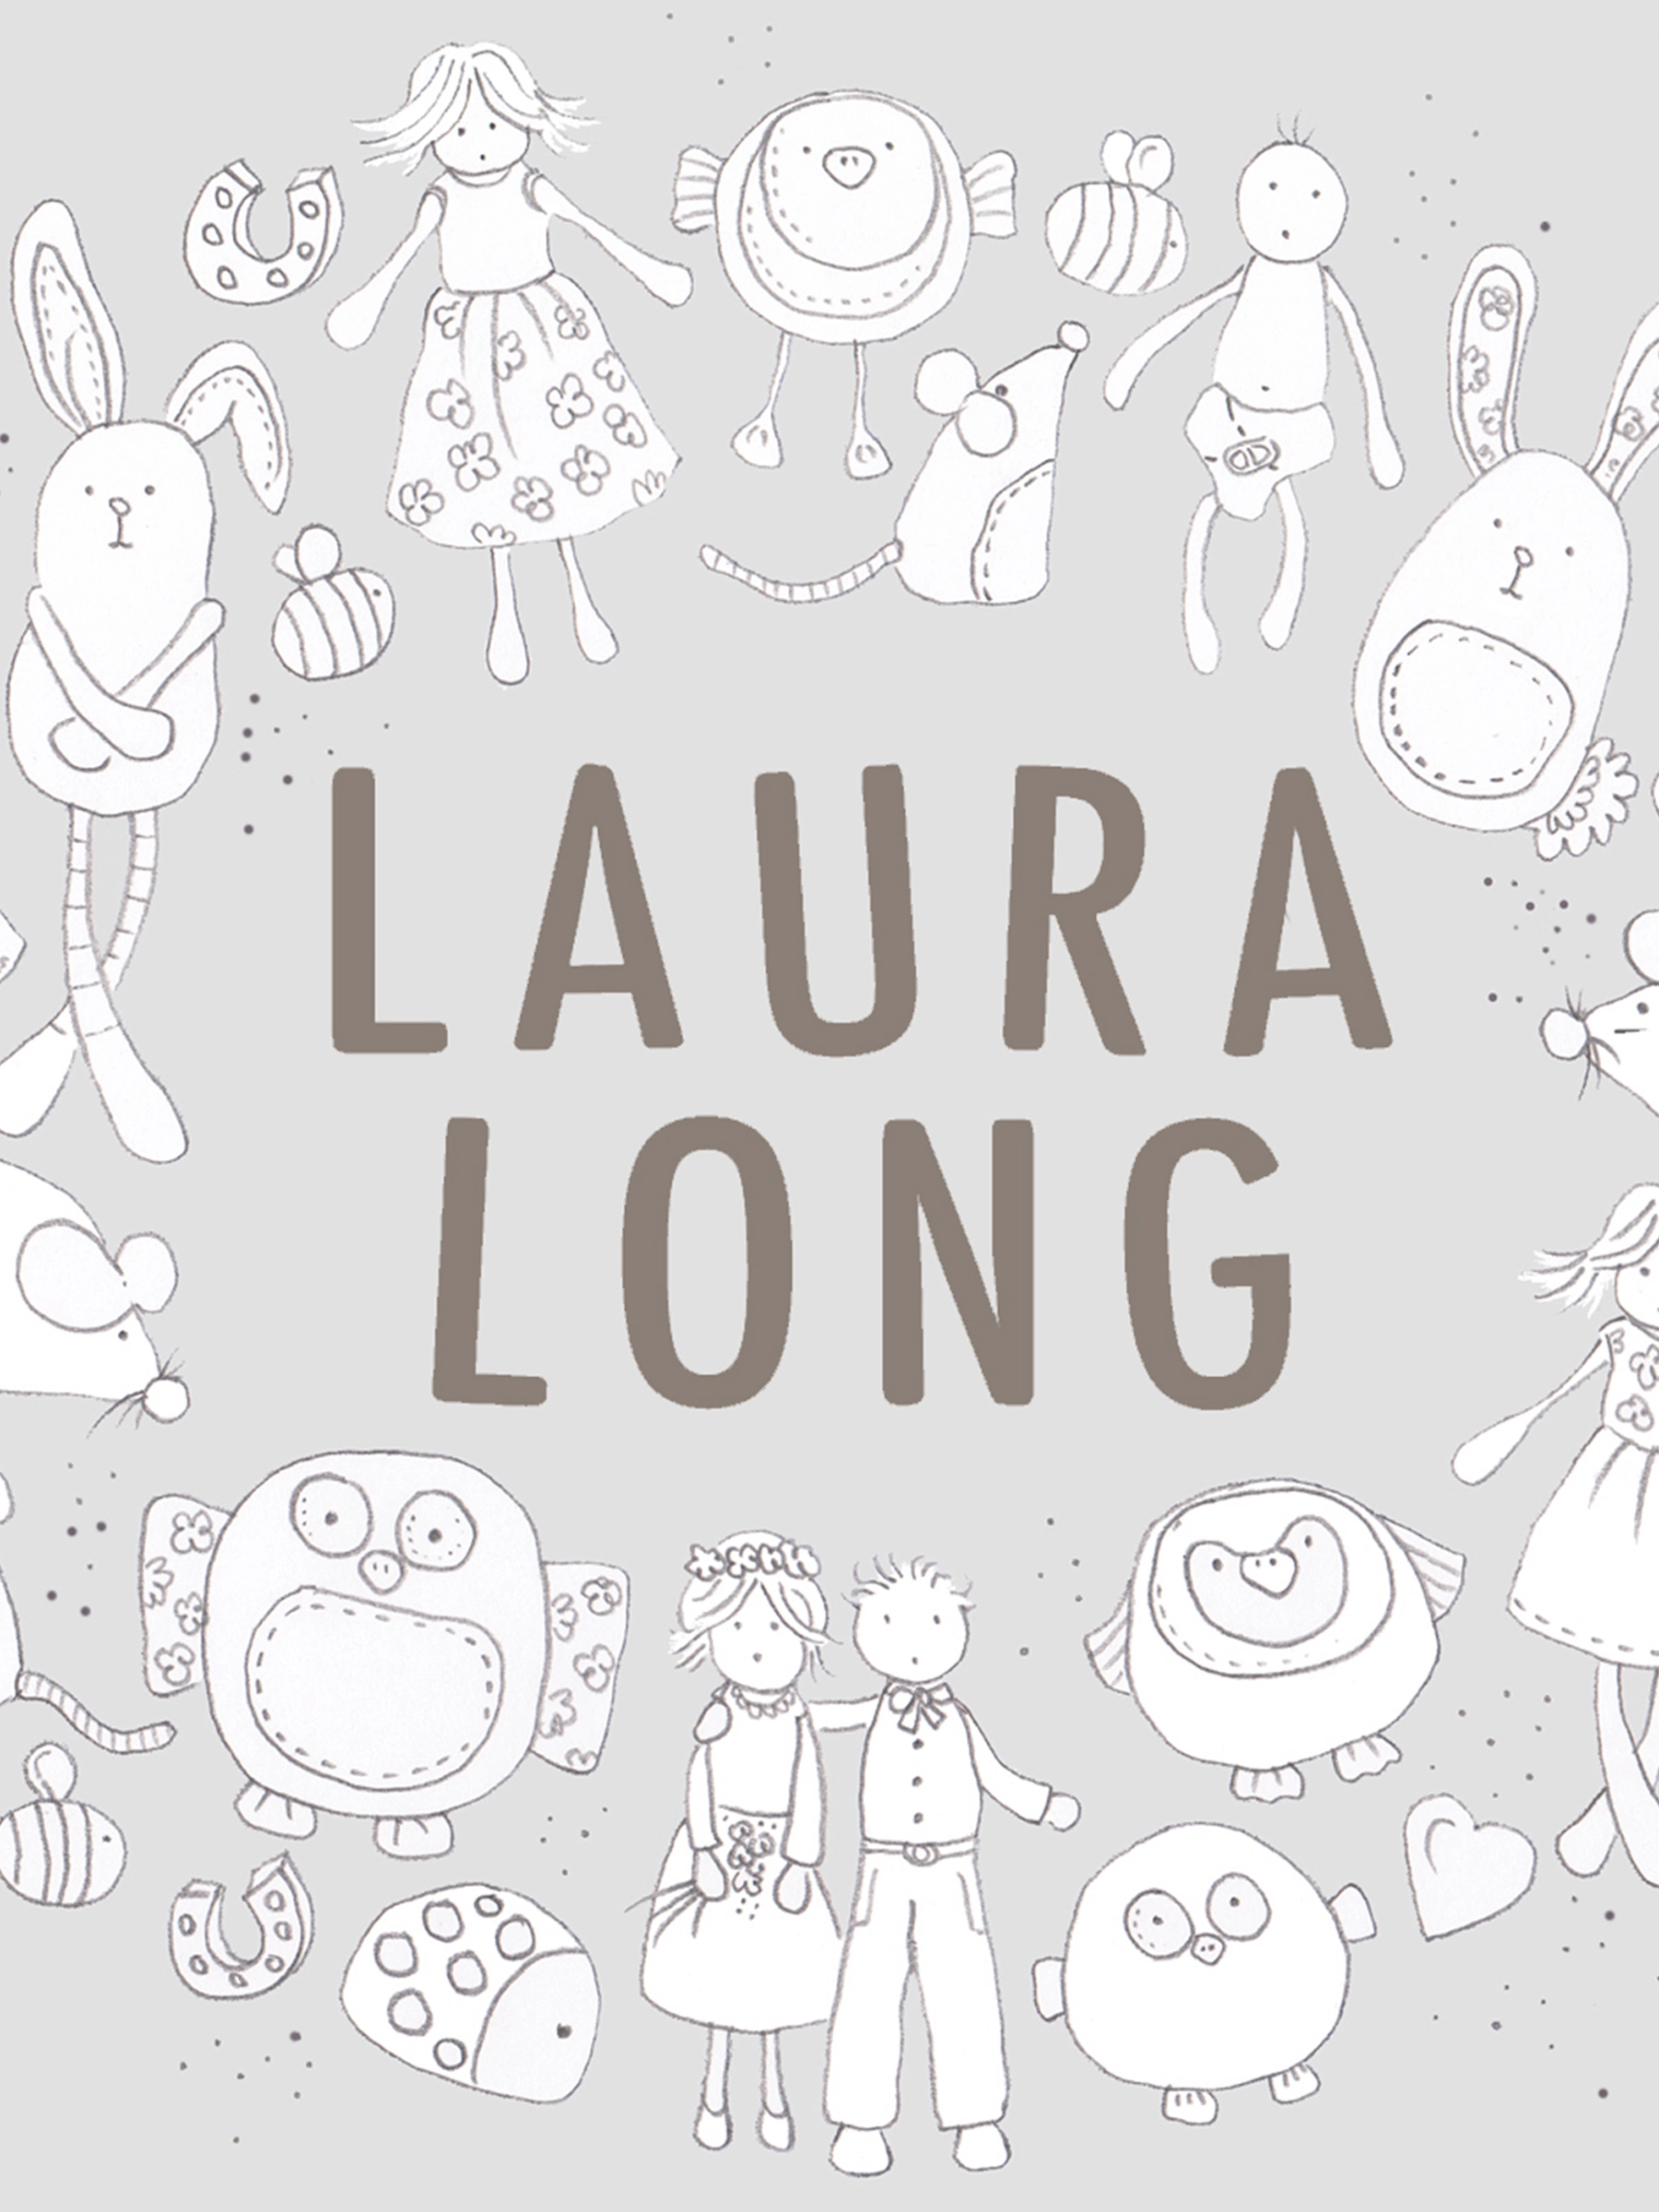 Laura Long drawing